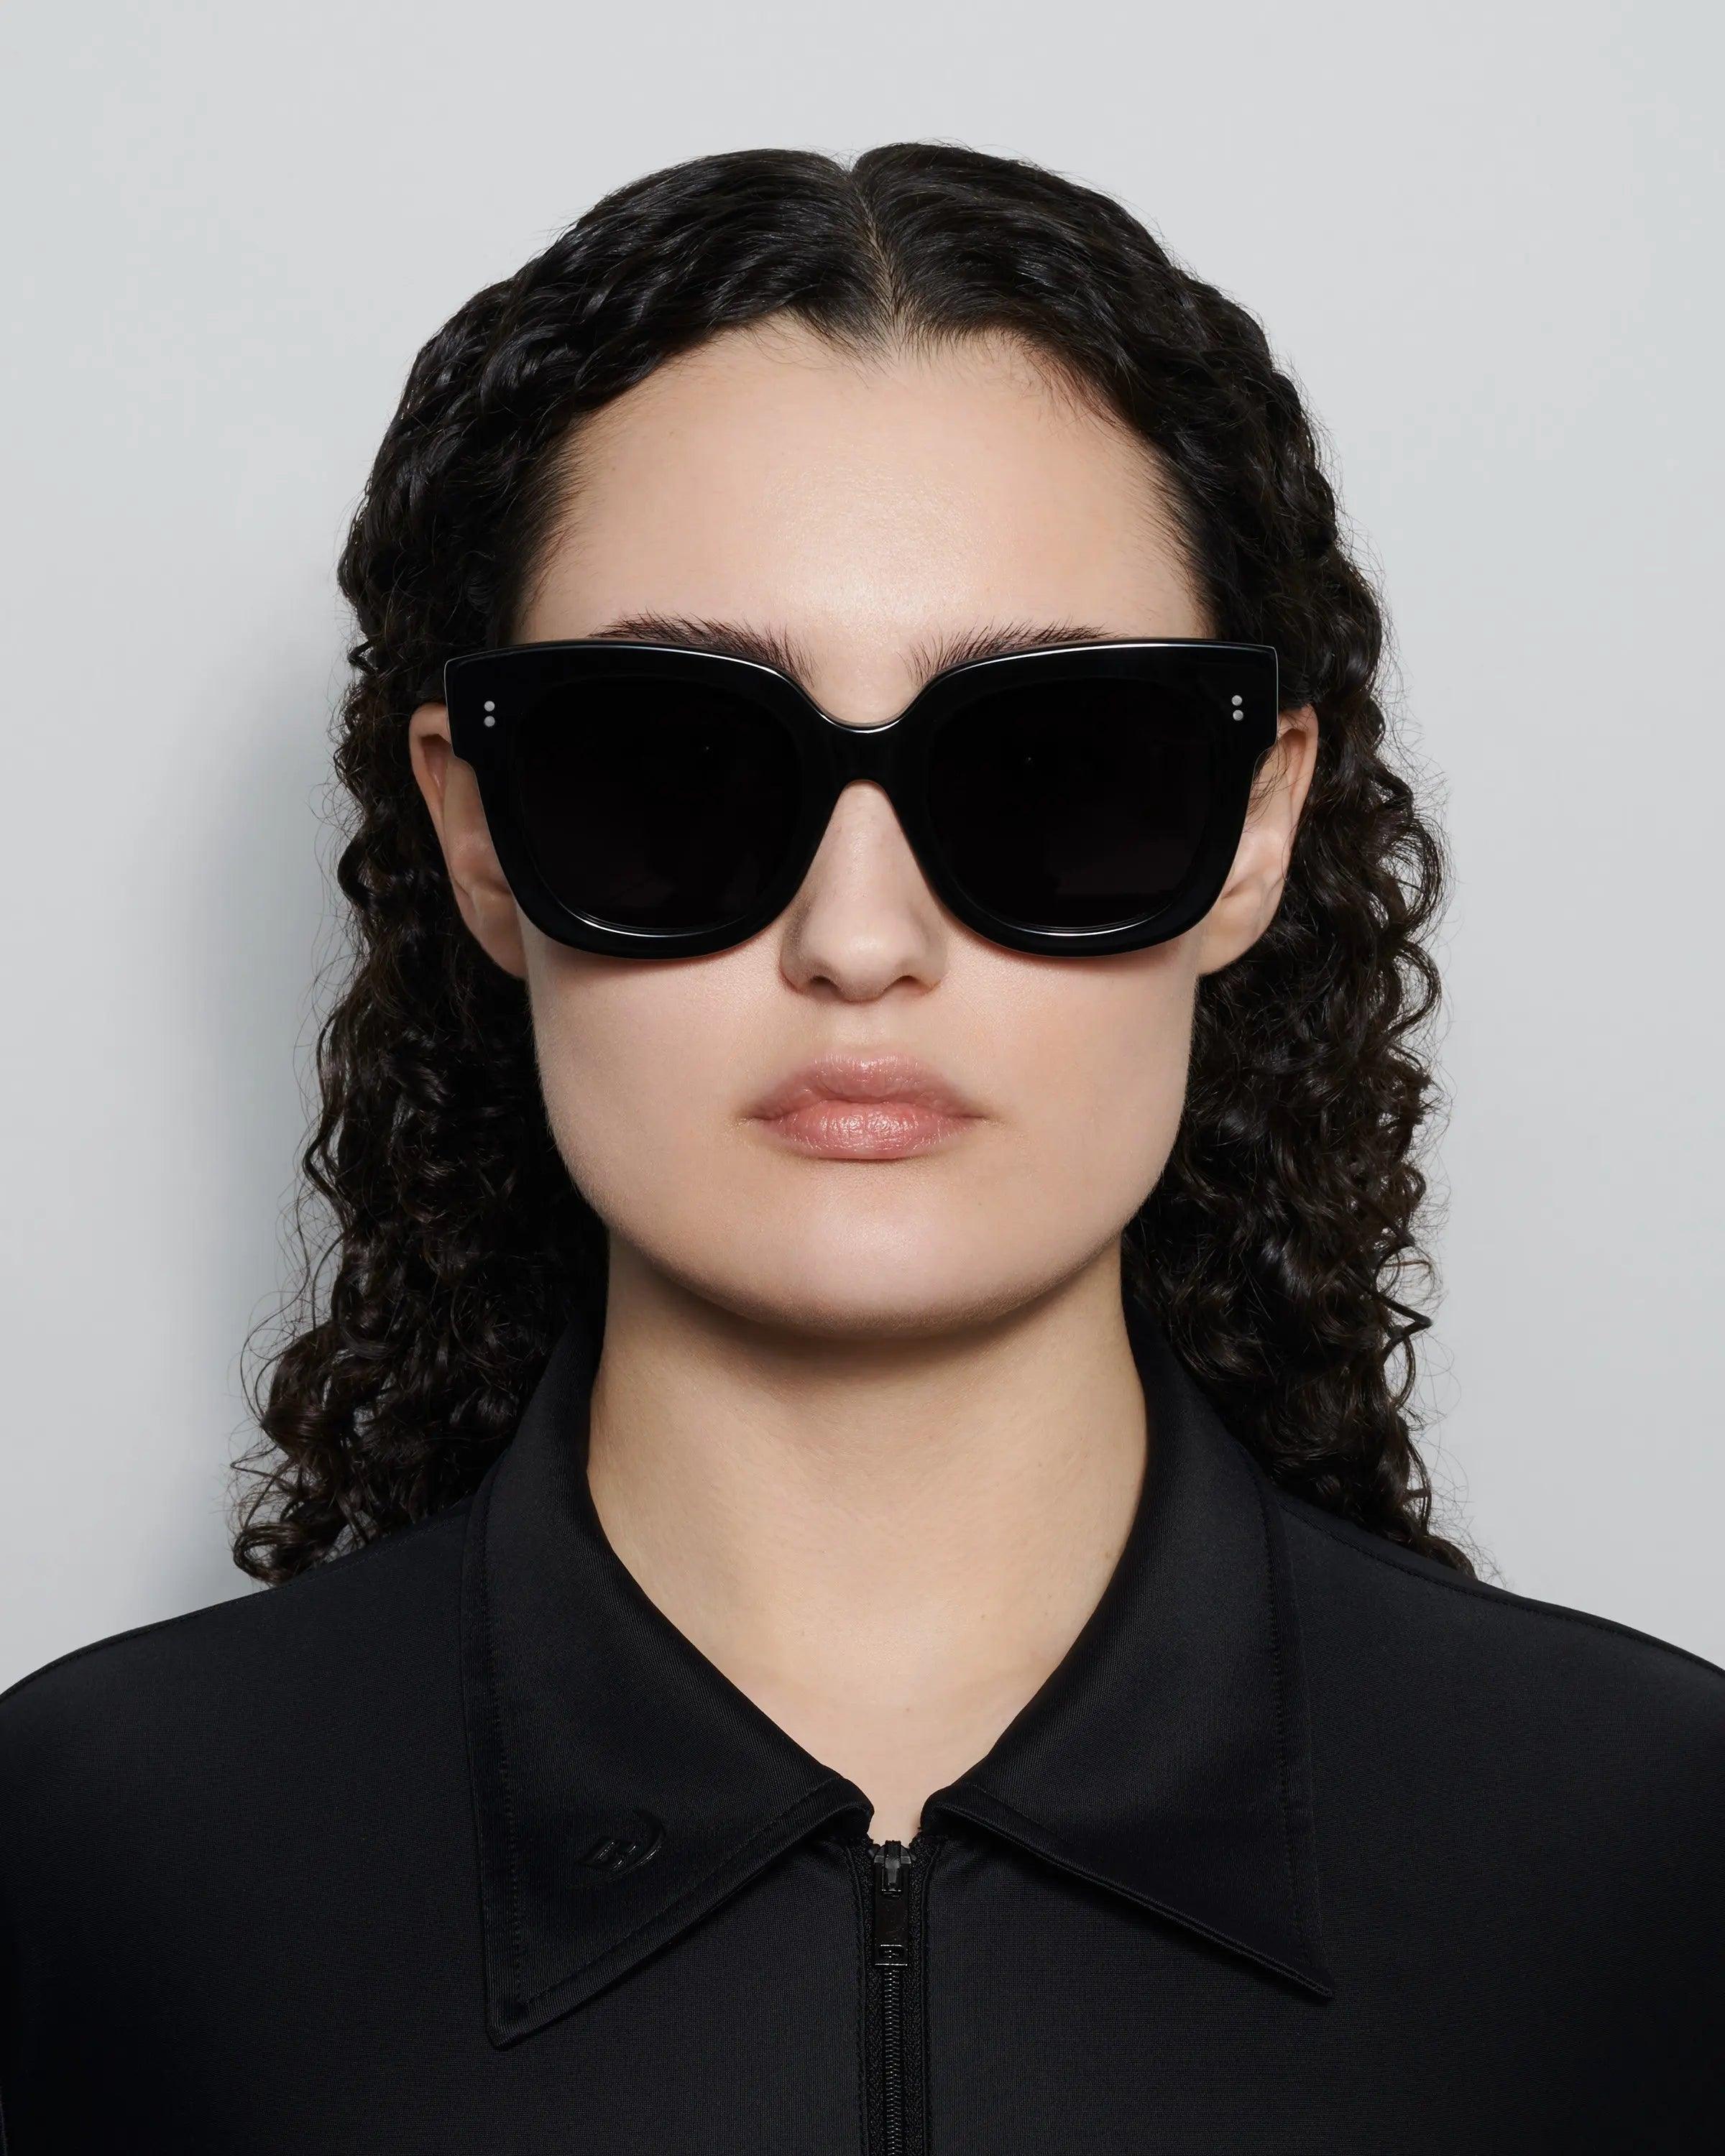 CHIMI 08 - Black - One size - Sunglasses